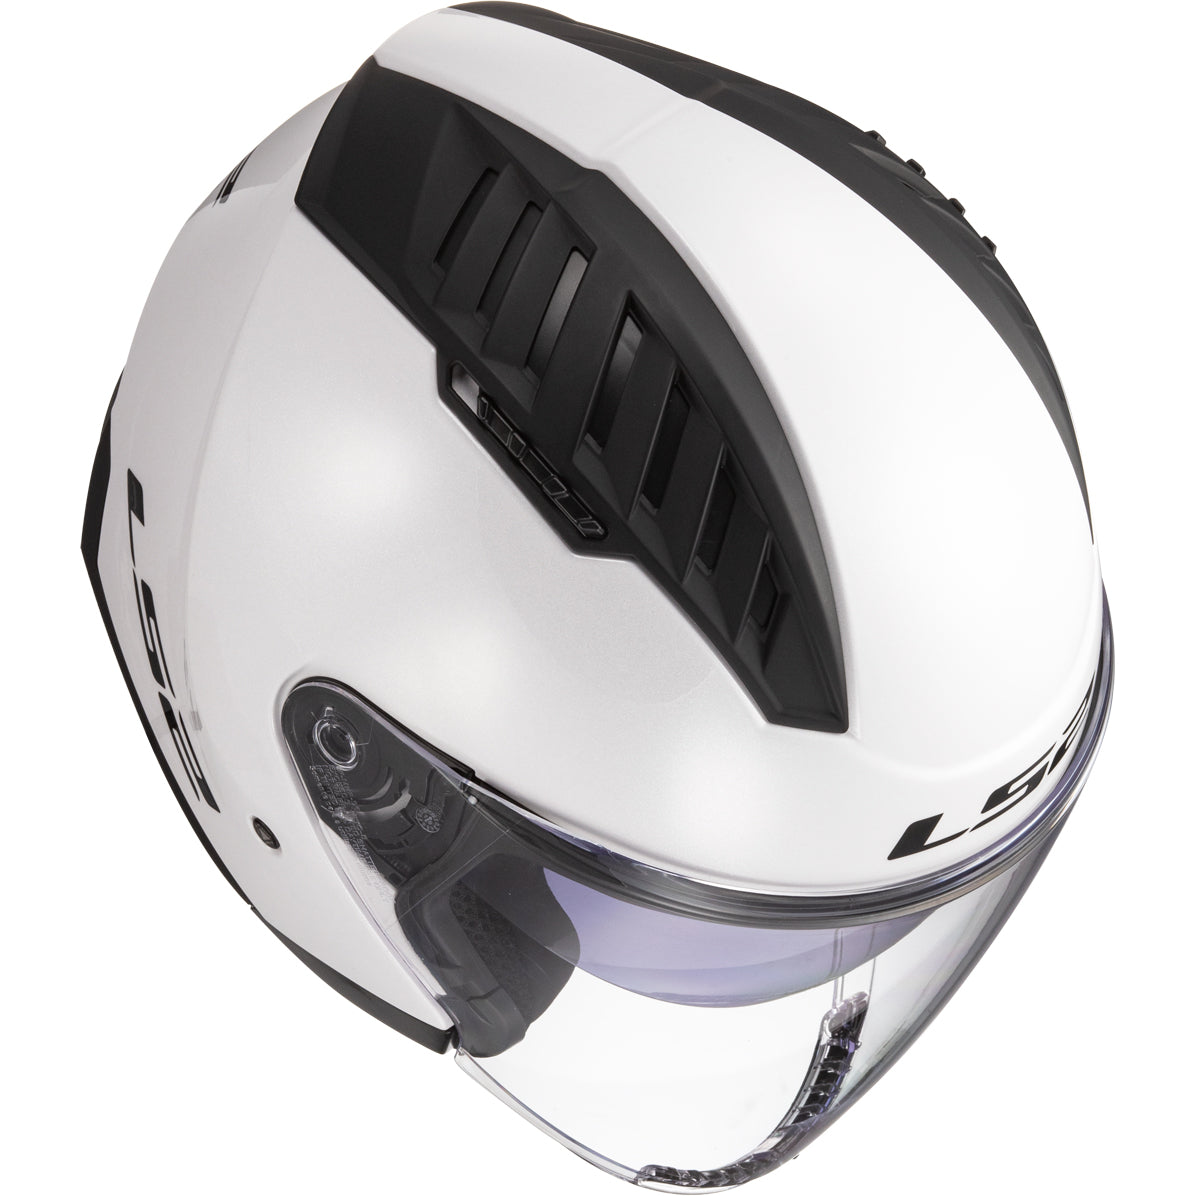 LS2 airflow motorcycle helmet 3/4 open face summer jet scooter half face  motorbike helm capacete casco LS2 OF562 vespa helmets